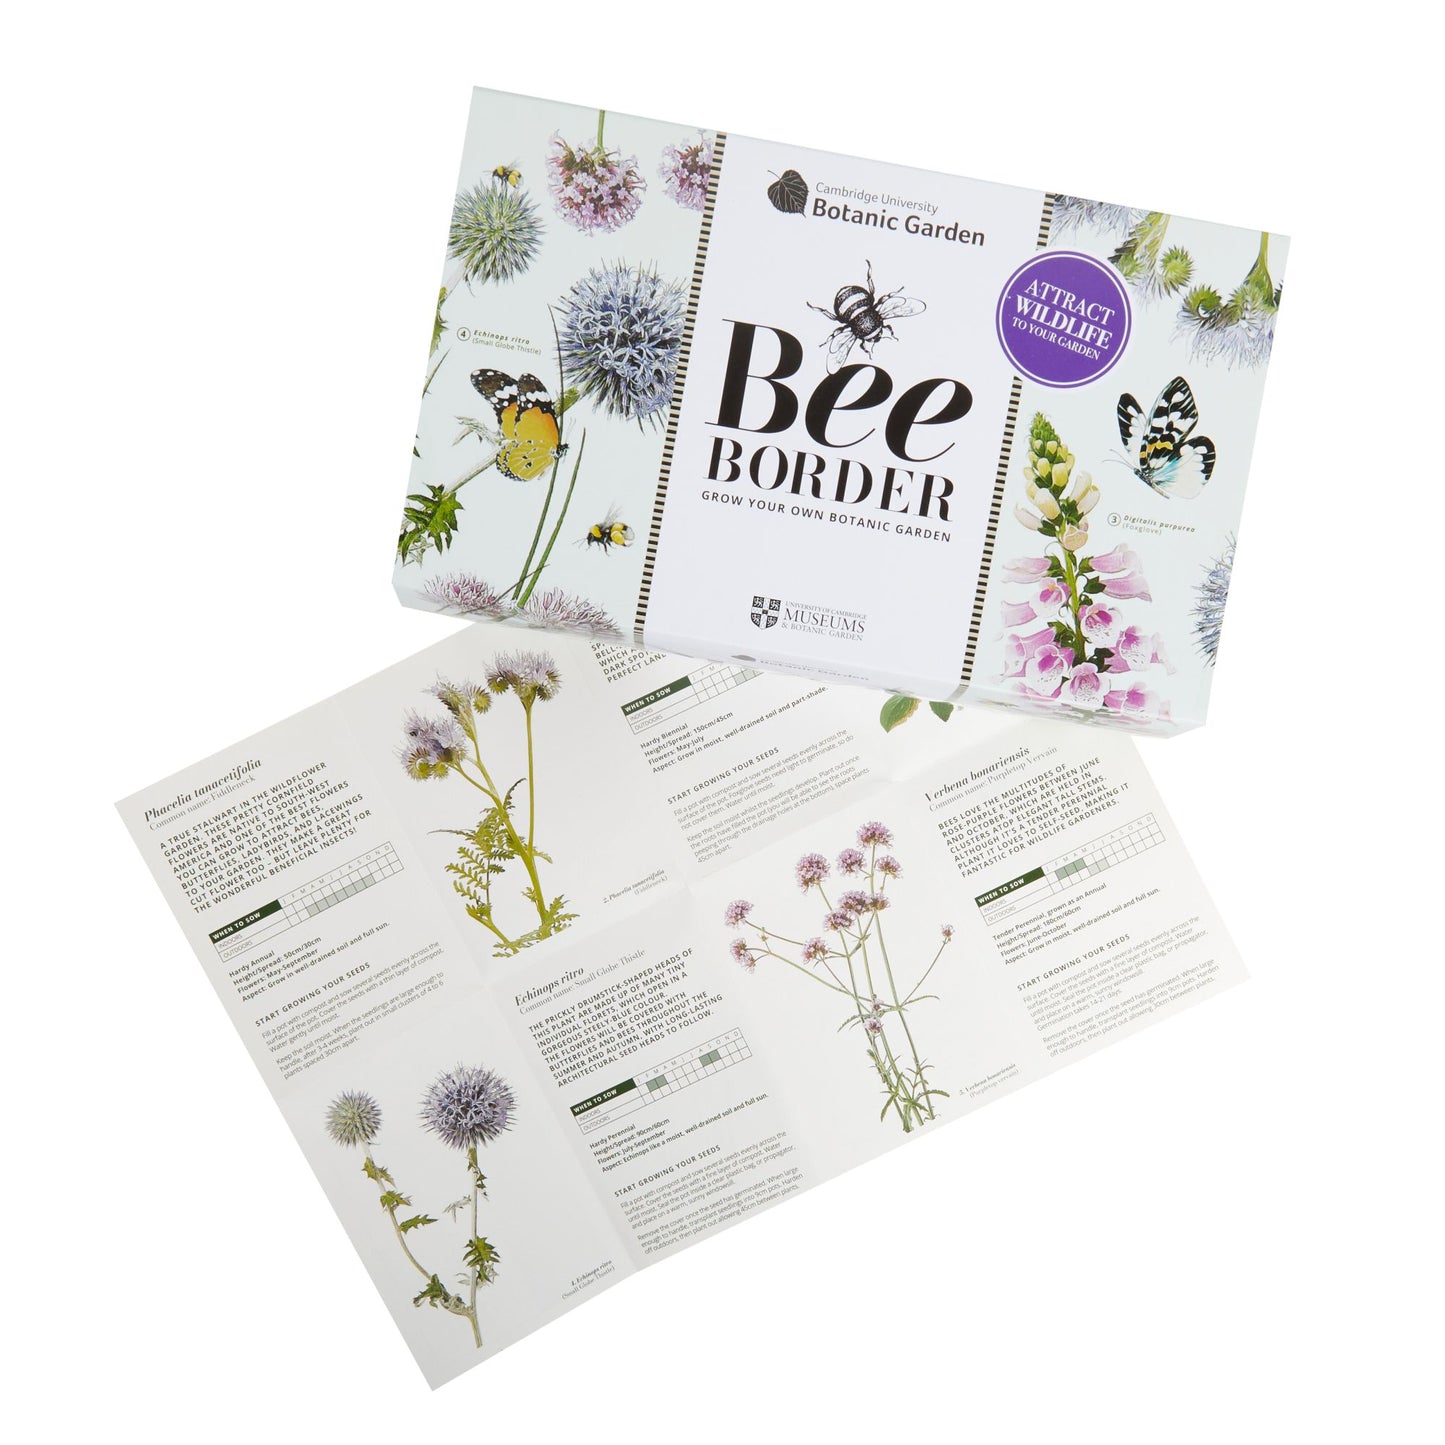 Bee Border - Seed growing kit